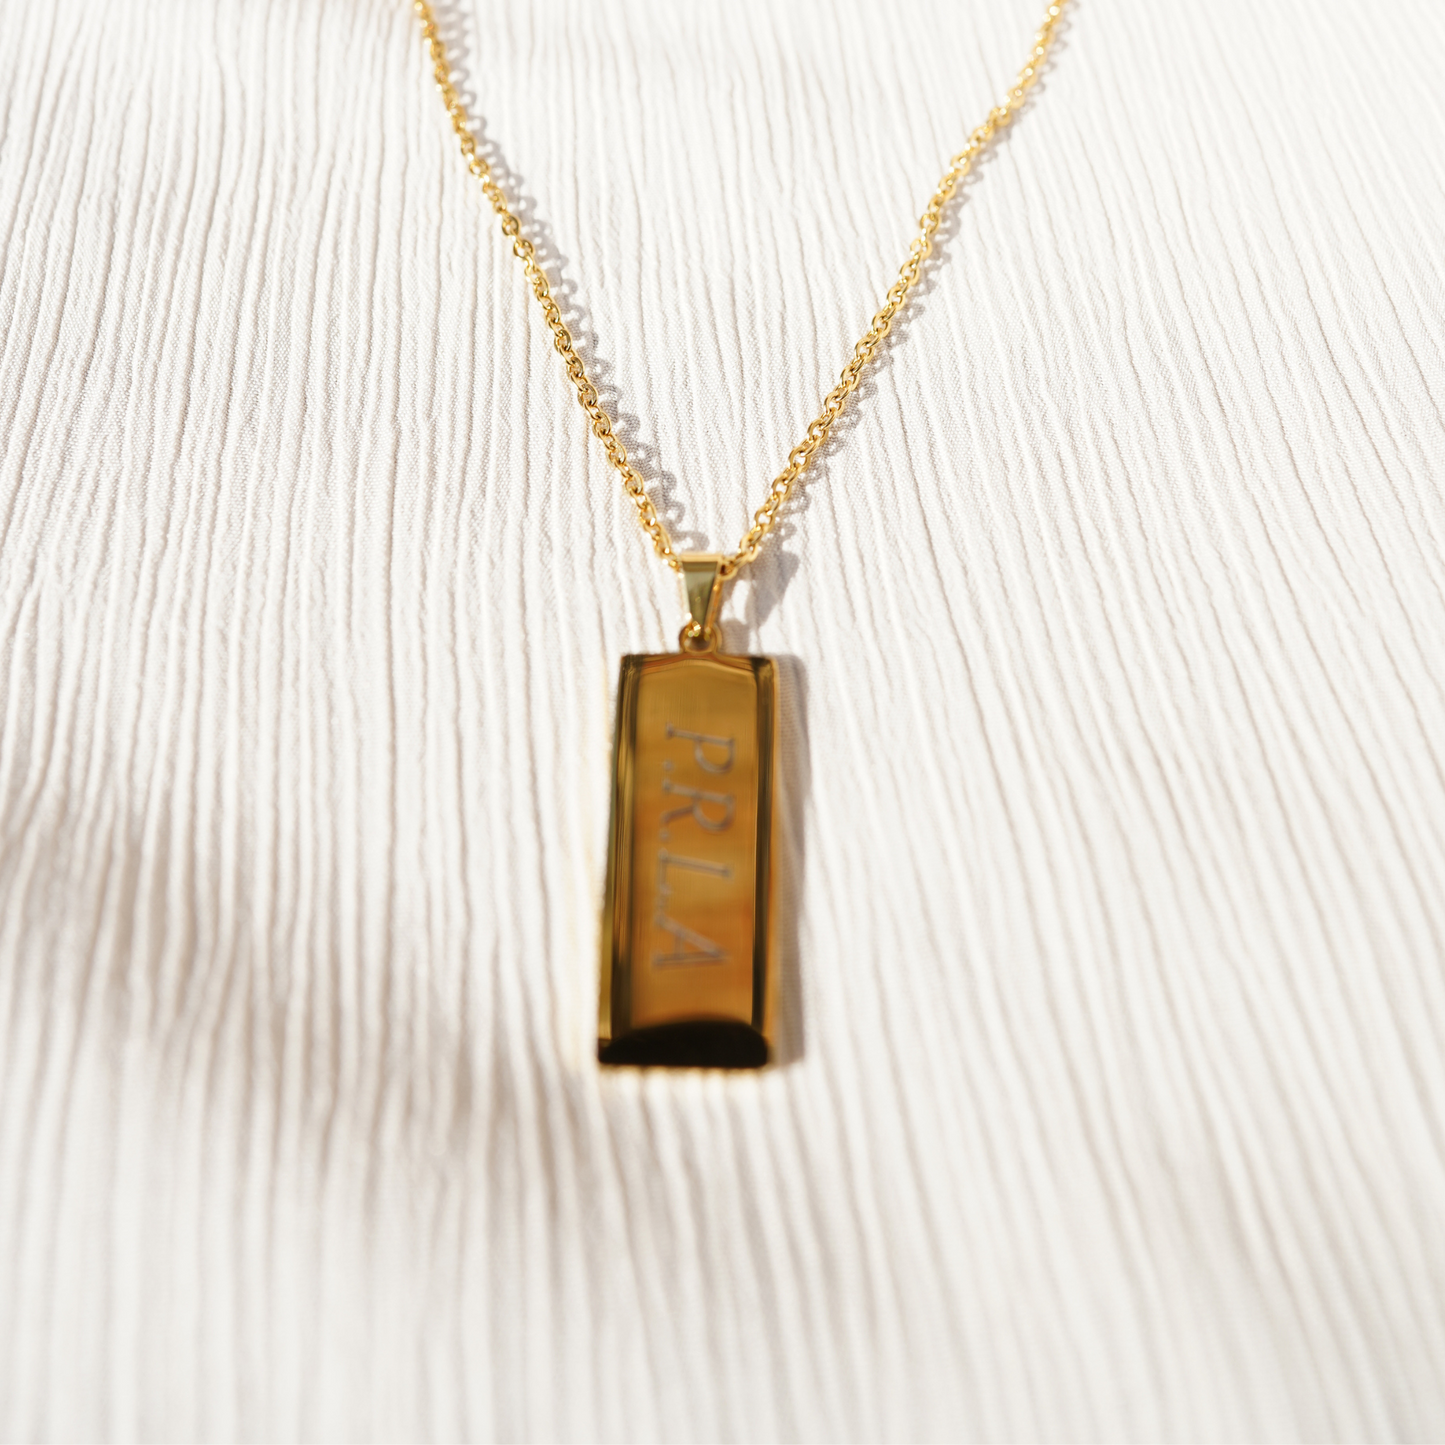 Personalized (30mm x 12mm) 18K Gold Vermeil Rectangle Pendant Necklace, Custom Tag | 18k Gold Vermeil